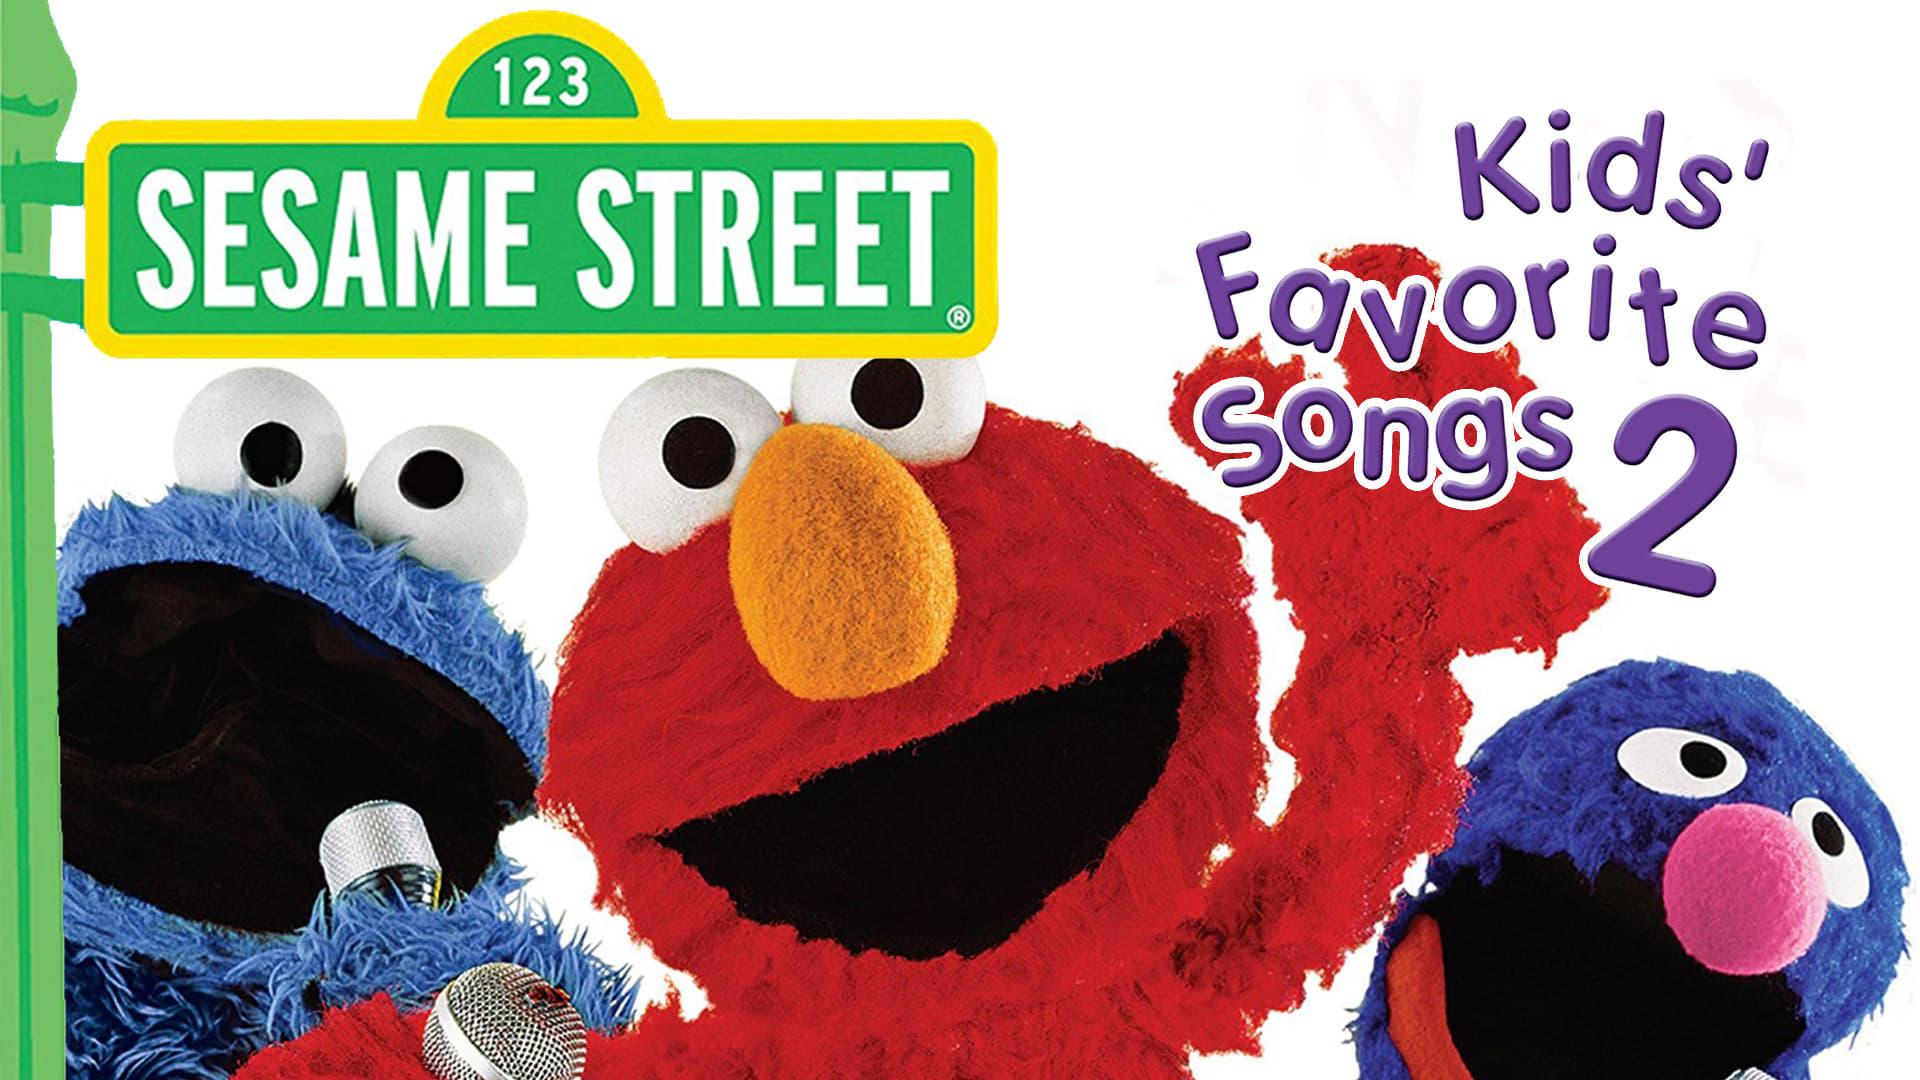 Sesame Street: Kids' Favorite Songs 2 backdrop